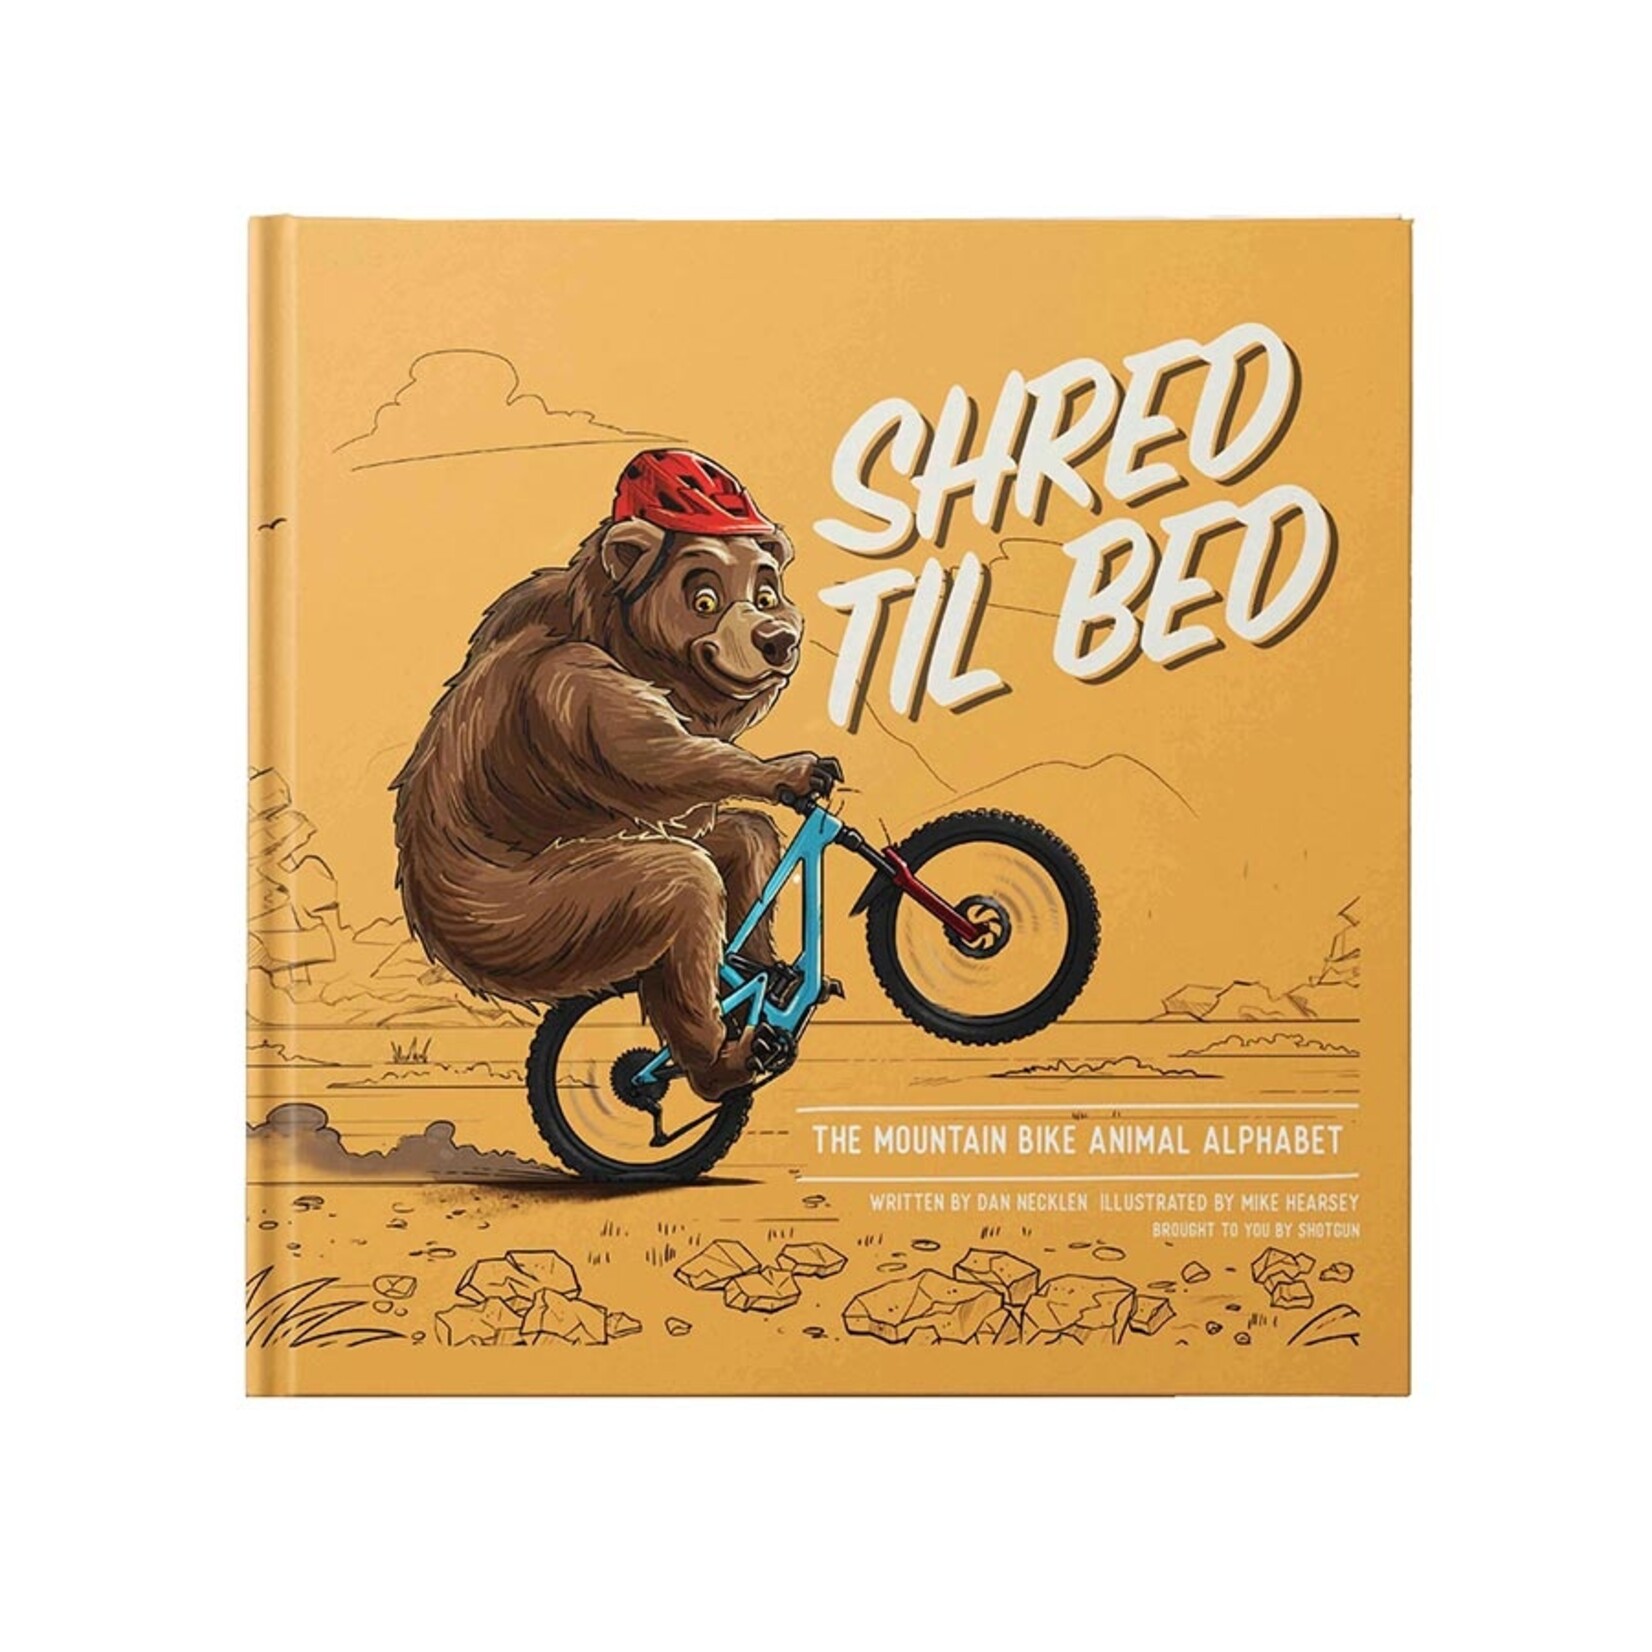 Kids Ride Shotgun Shotgun, Shred Til Bed, Book